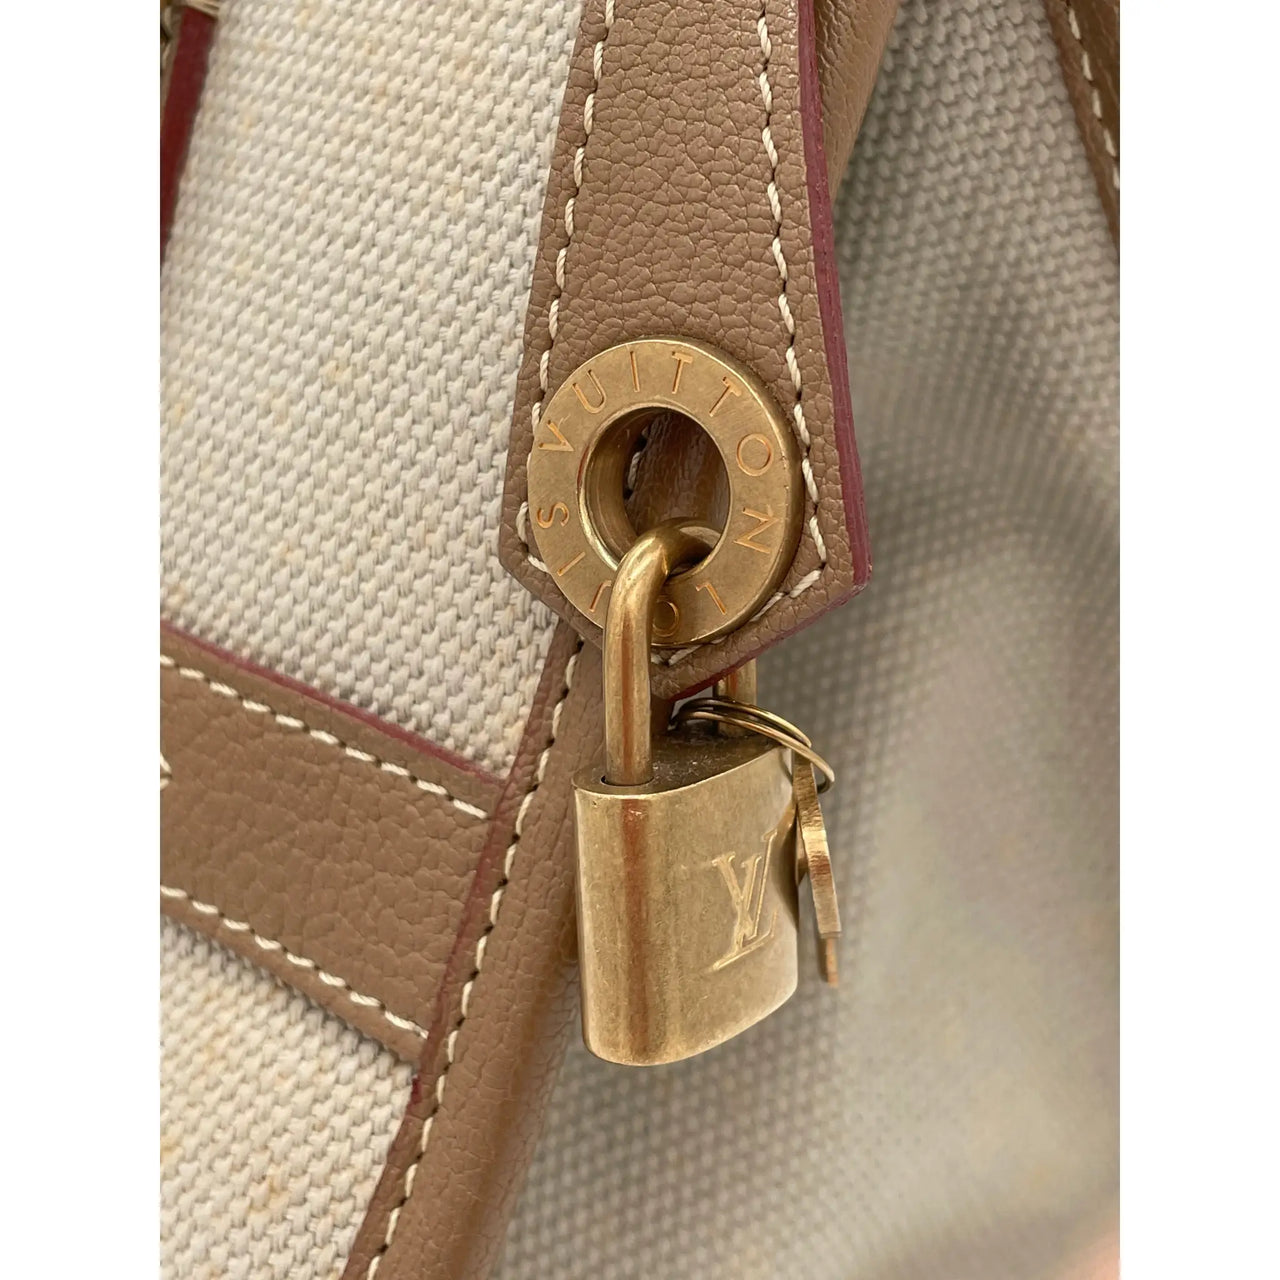 Louis Vuitton 200th anniversary tote bag